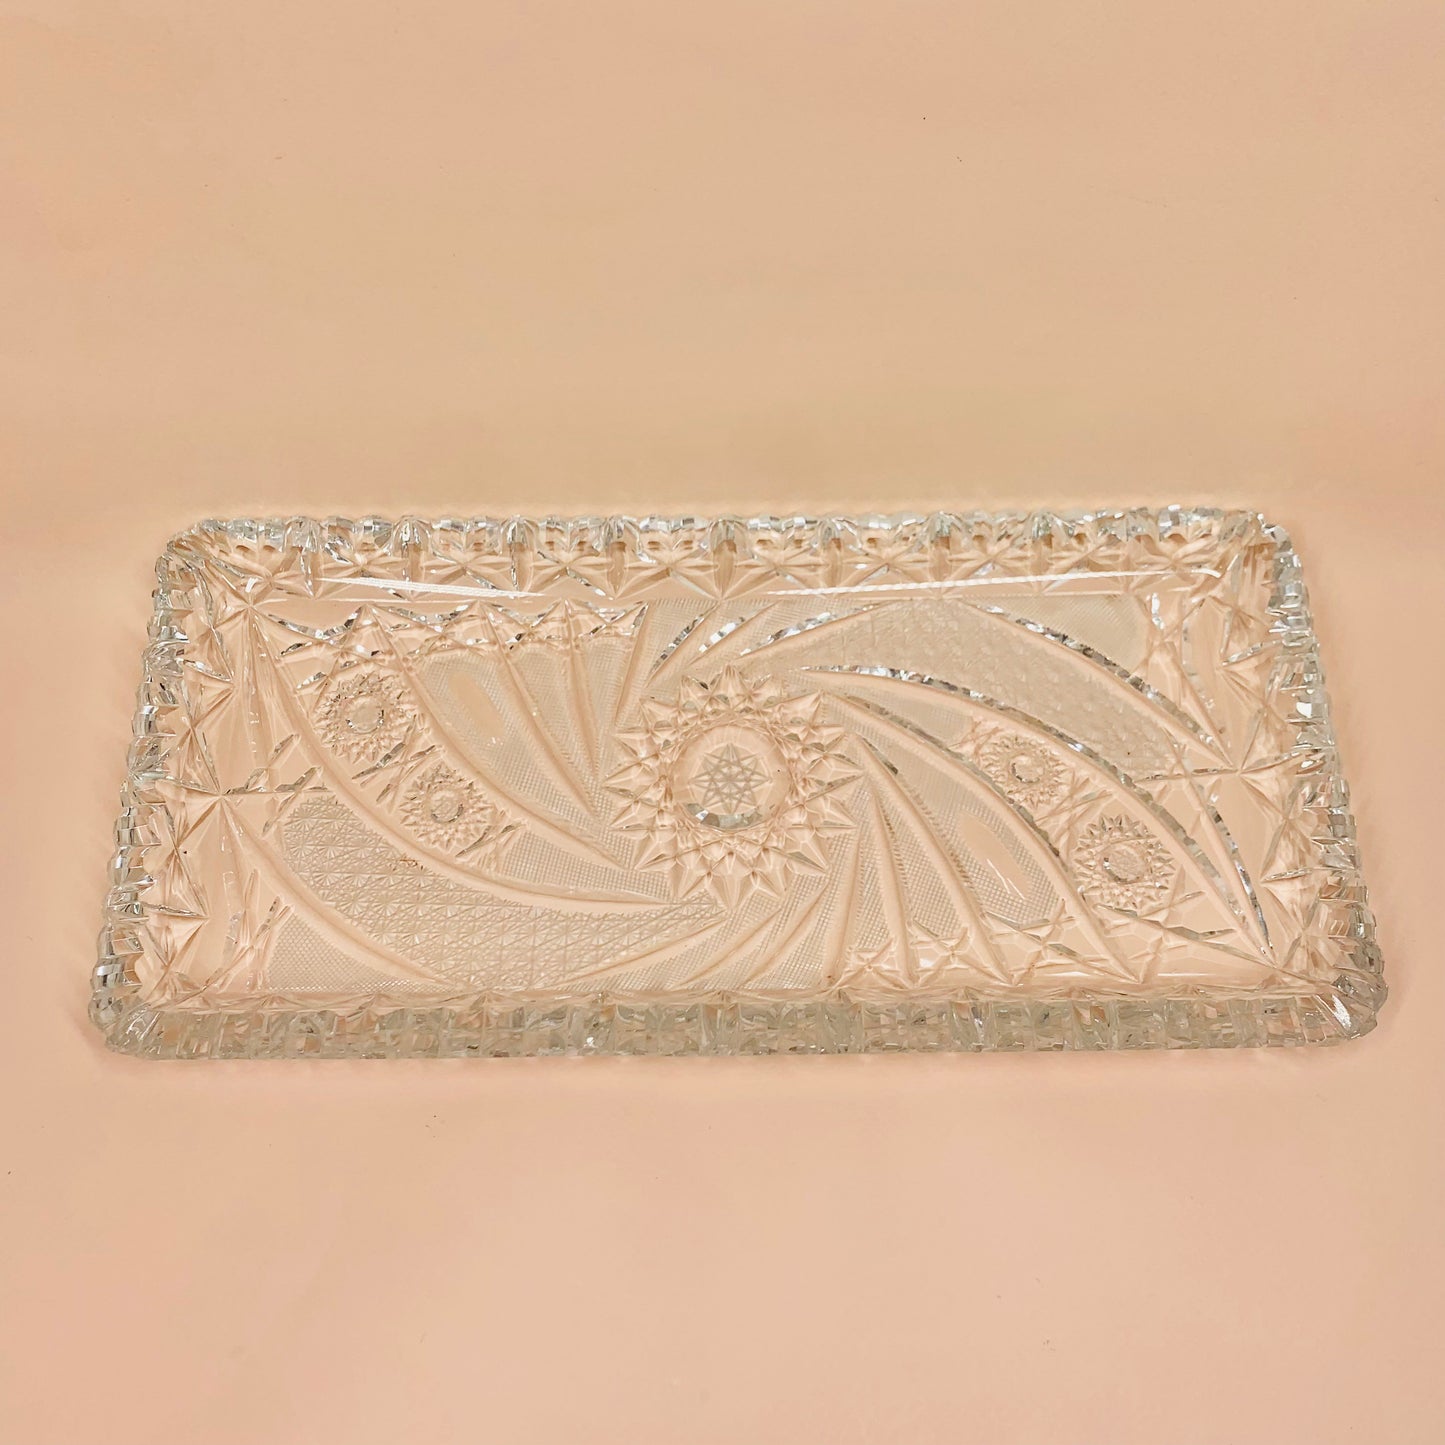 Antique hand cut star pattern rectangular crystal serving tray